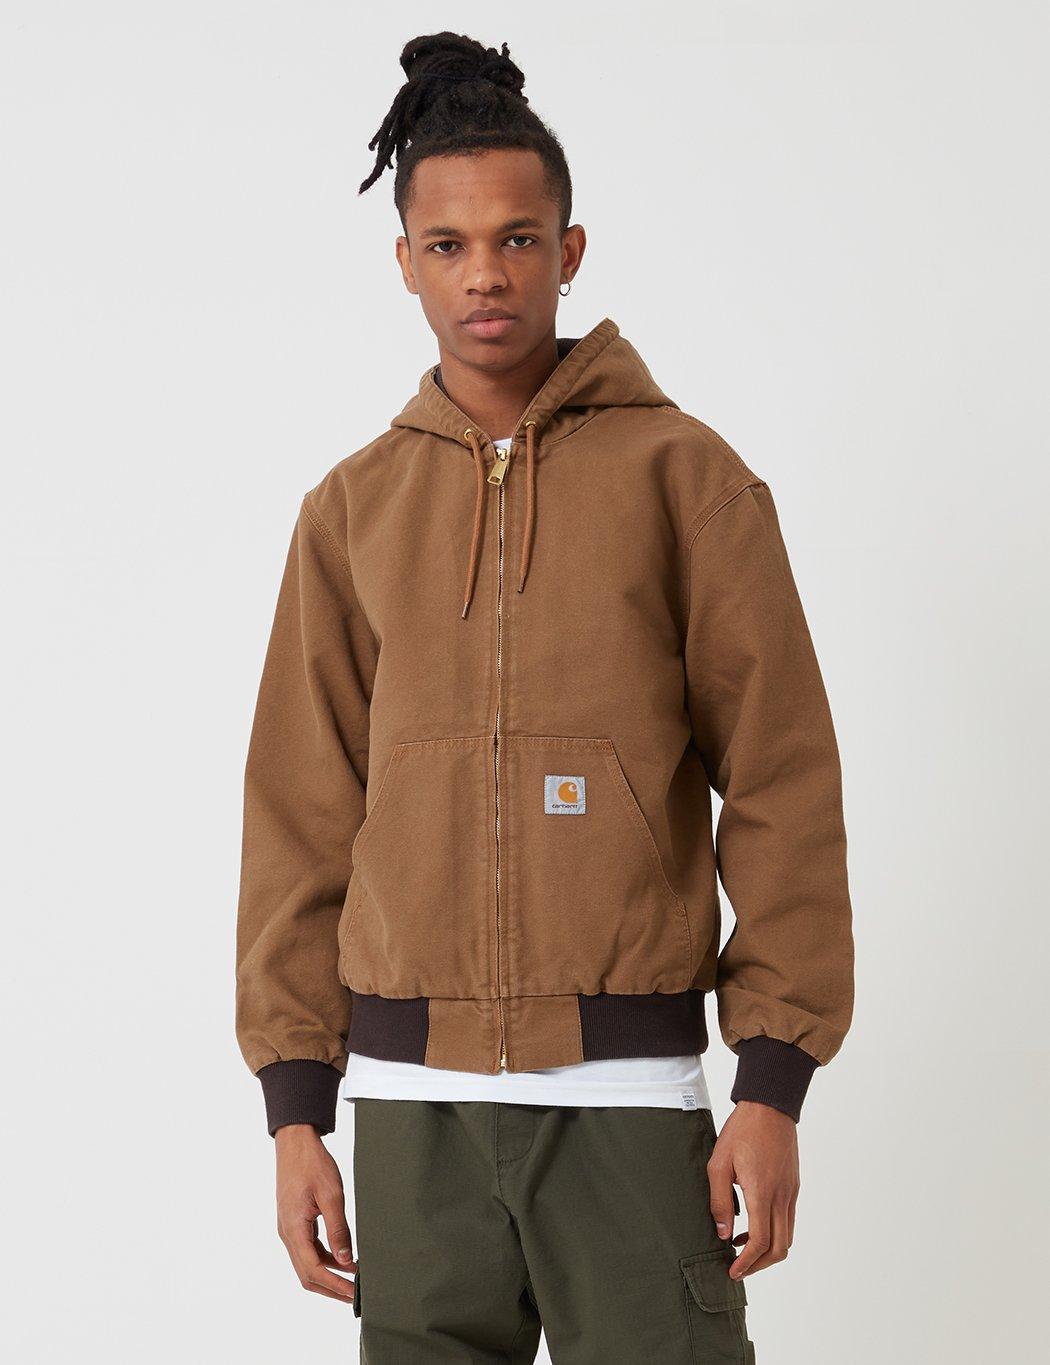 Carhartt Cotton -wip Active Jacket in Brown for Men - Lyst